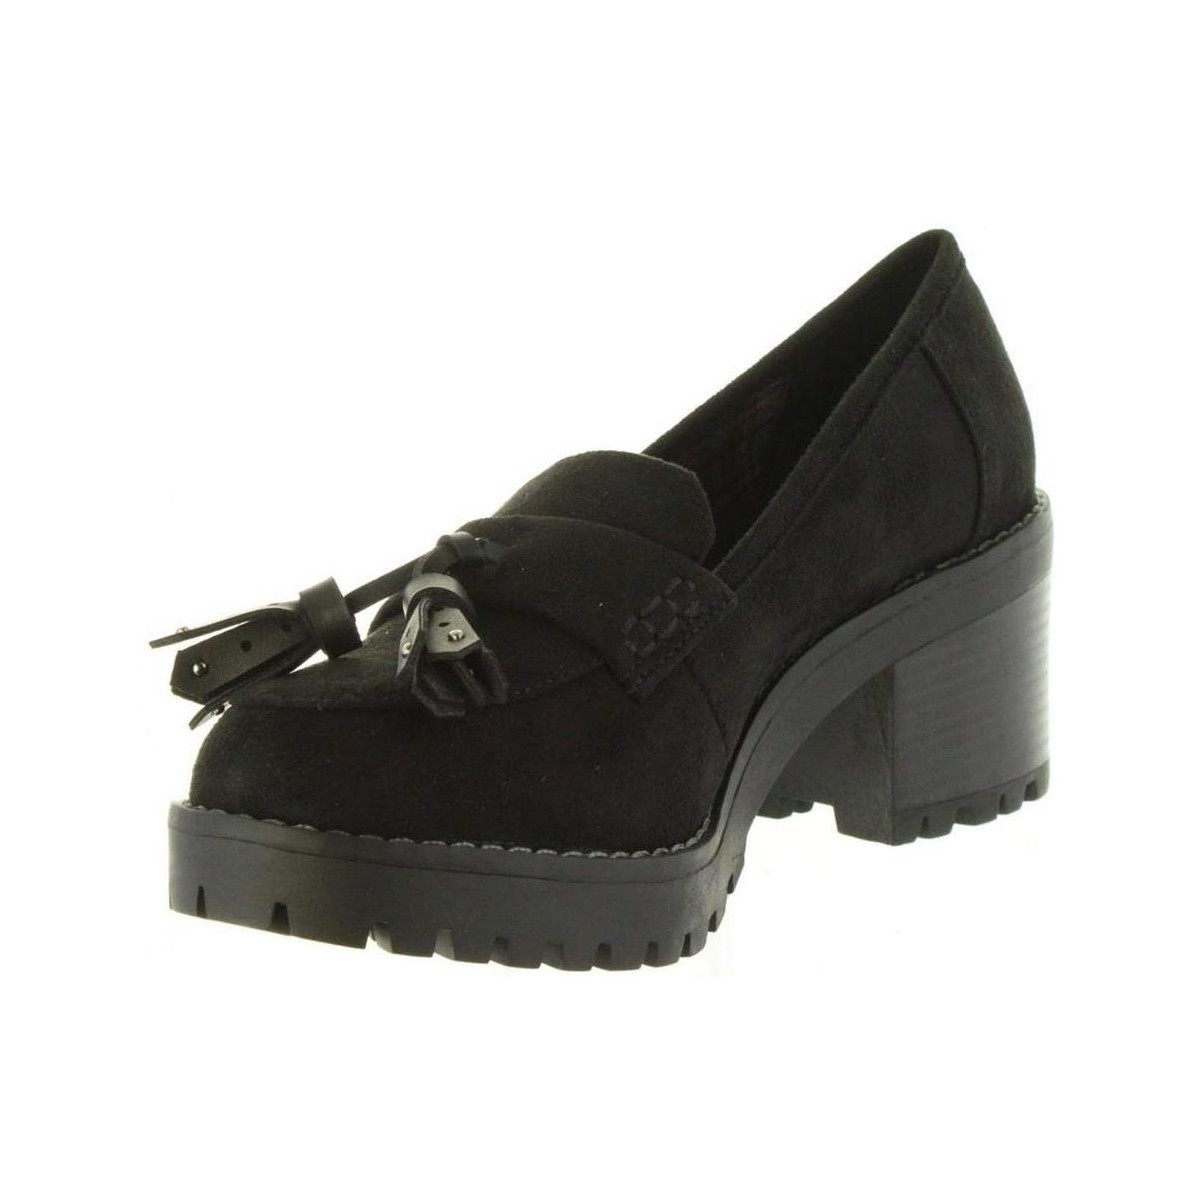 Chaussures Femme Escarpins MTNG 57525 Noir